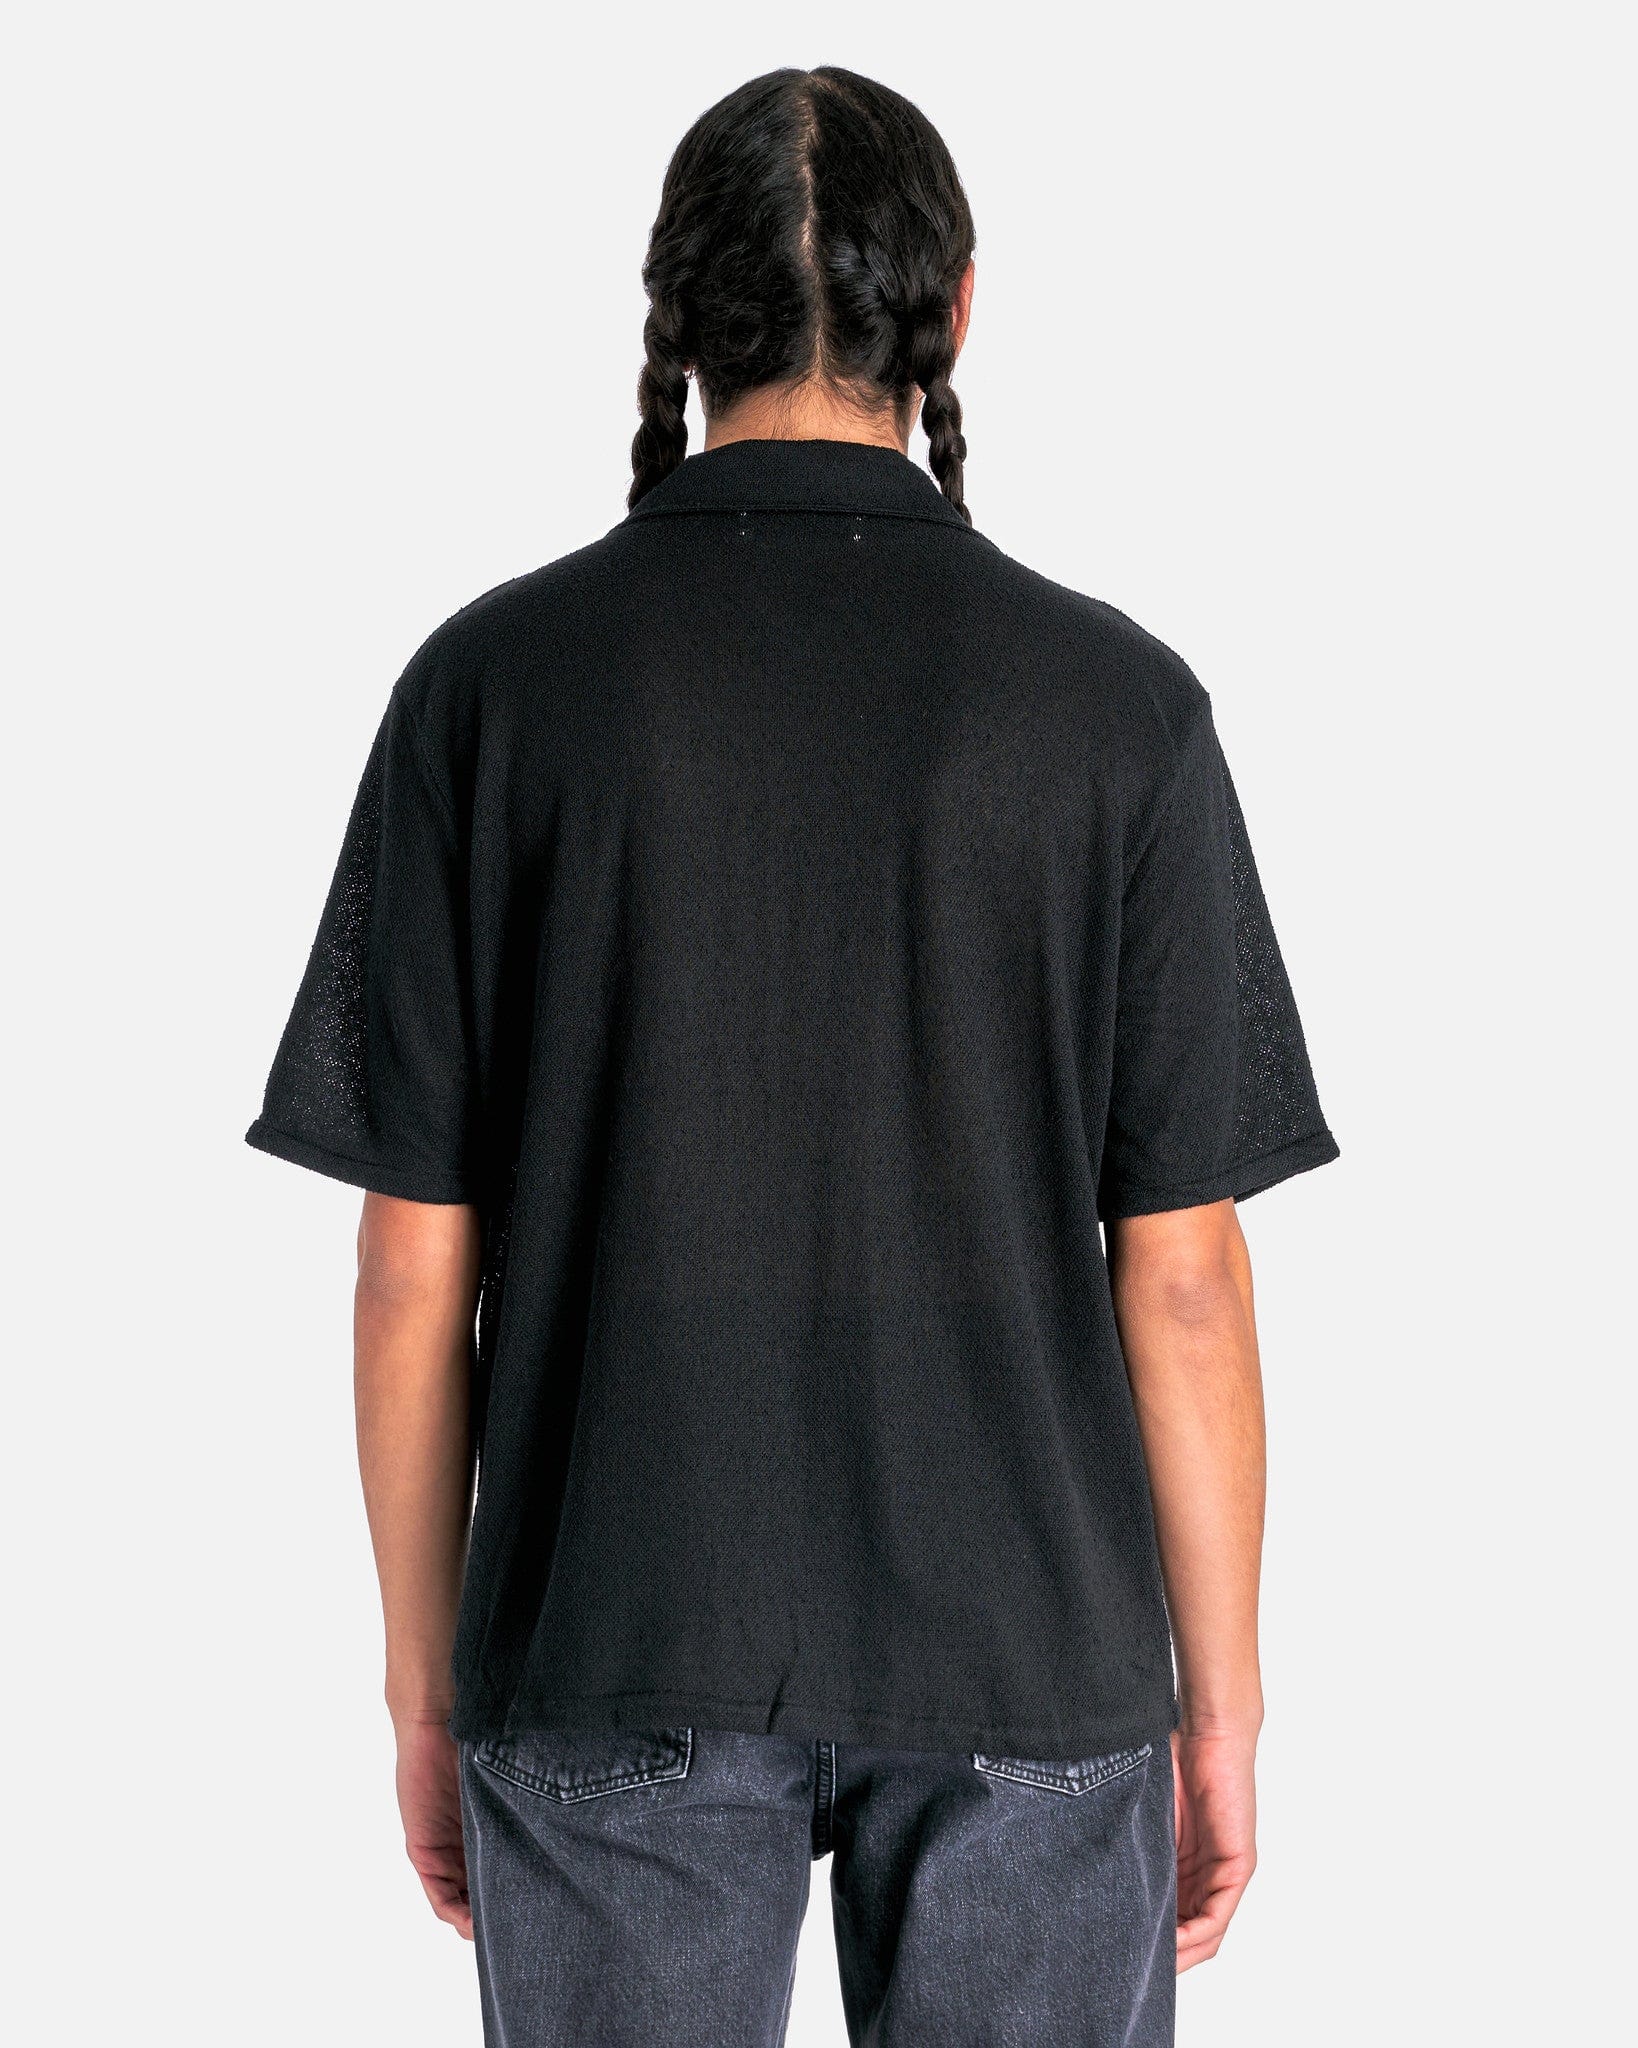 – Box Shortsleeve SVRN Shirt Boucle in Black